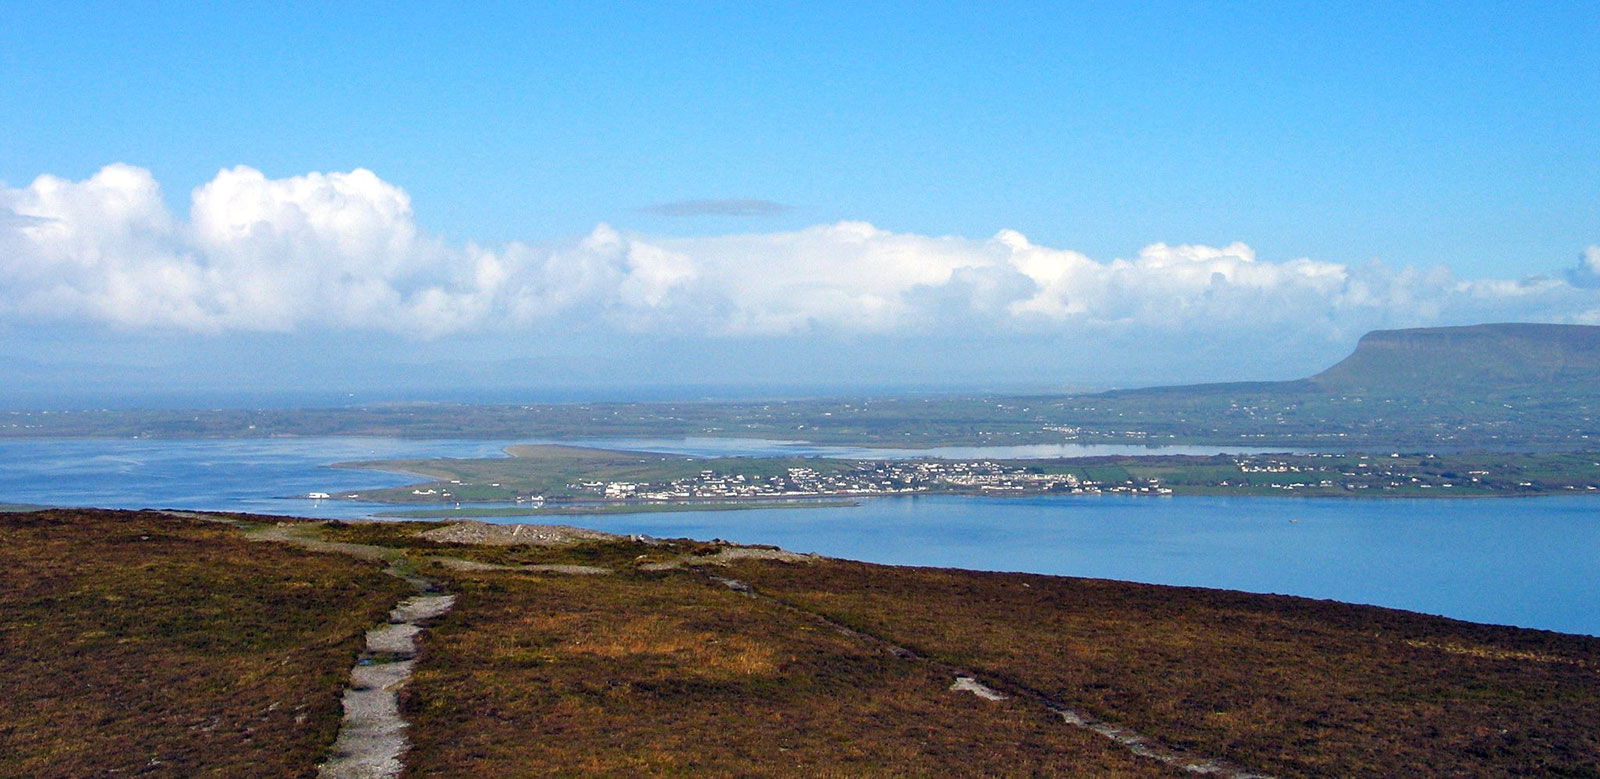 The view north to Benbulben in County Sligo.